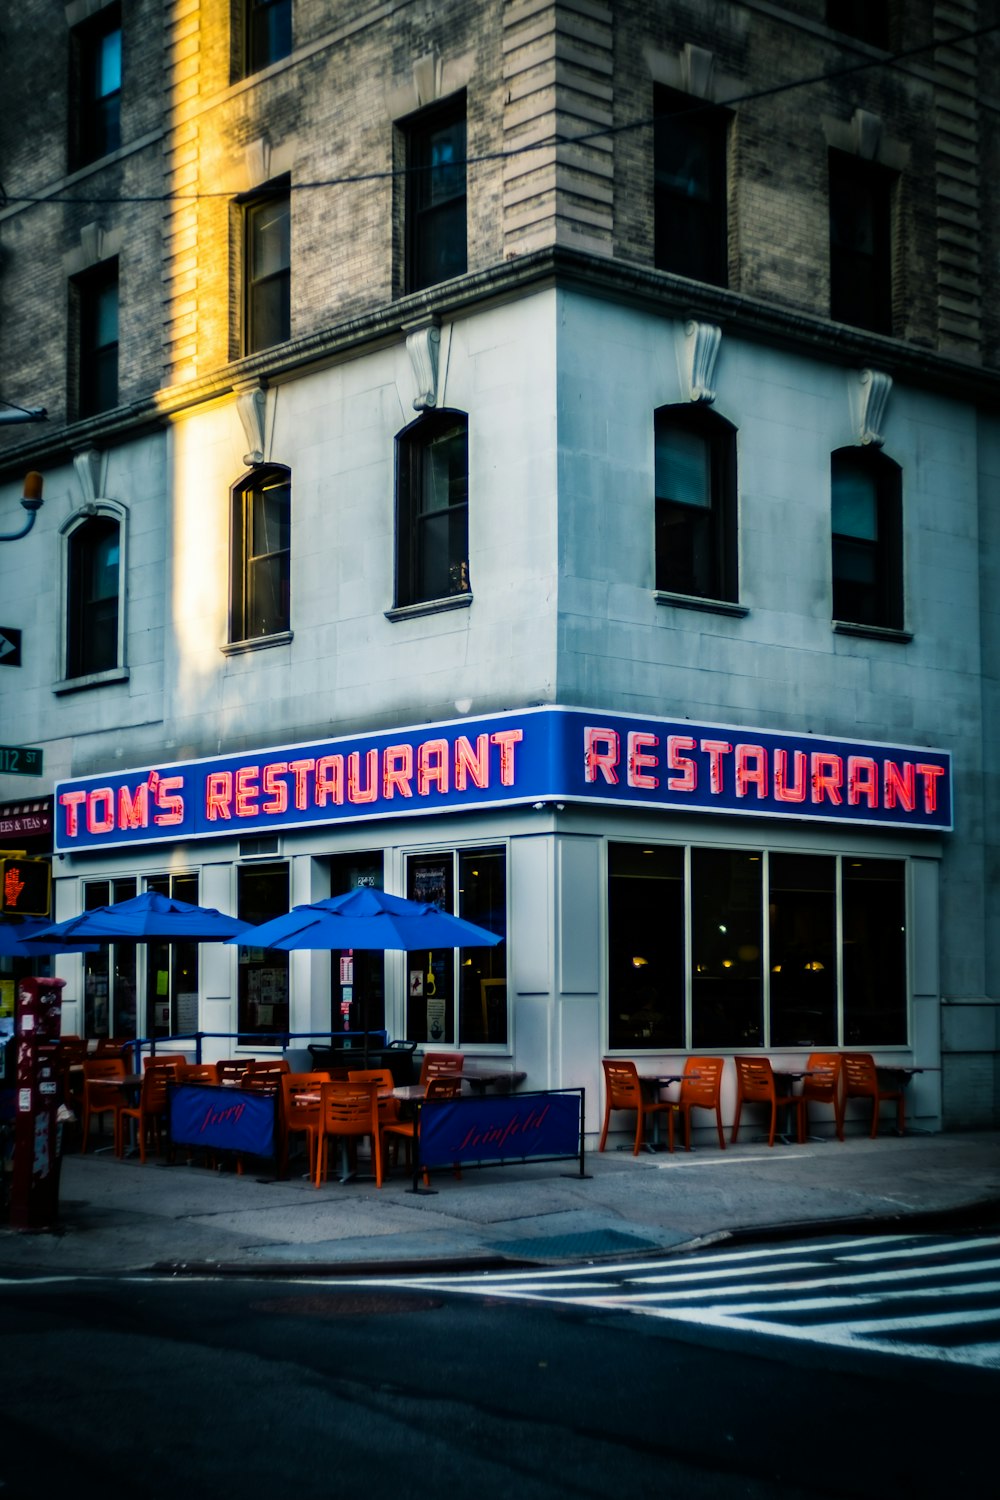 Tom's Restaurant building